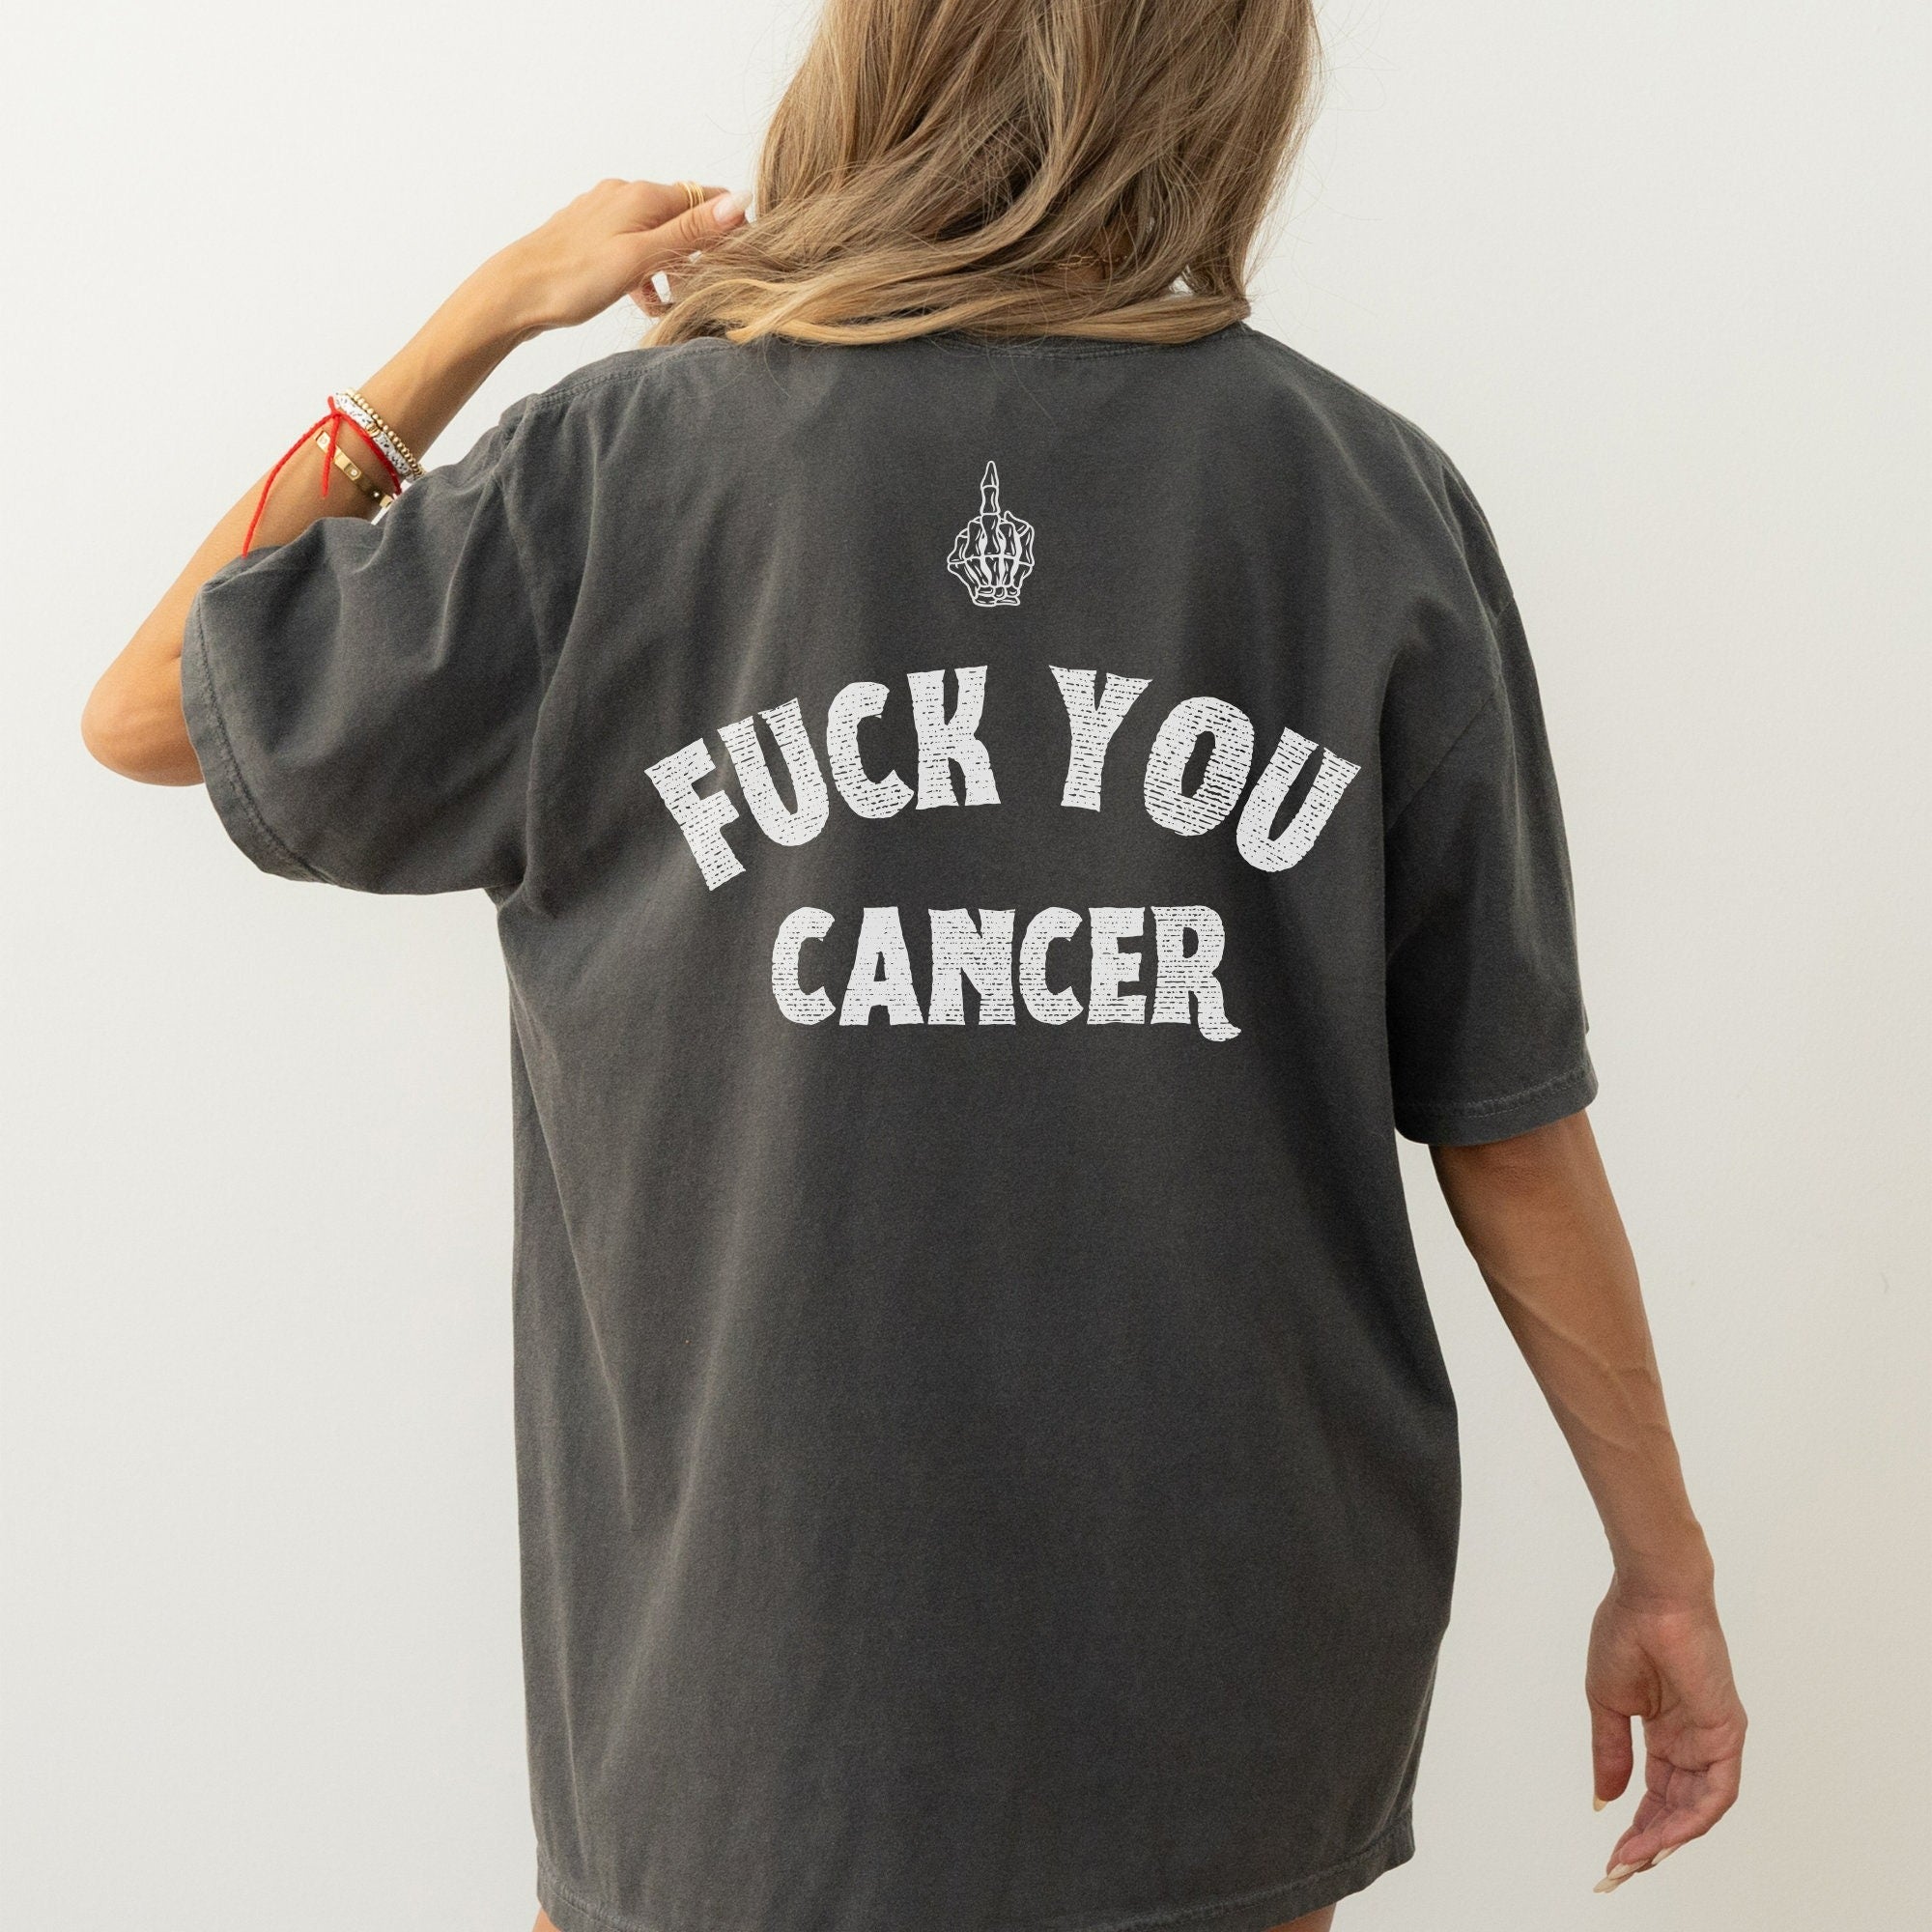 Fuck You Cancer Shirt